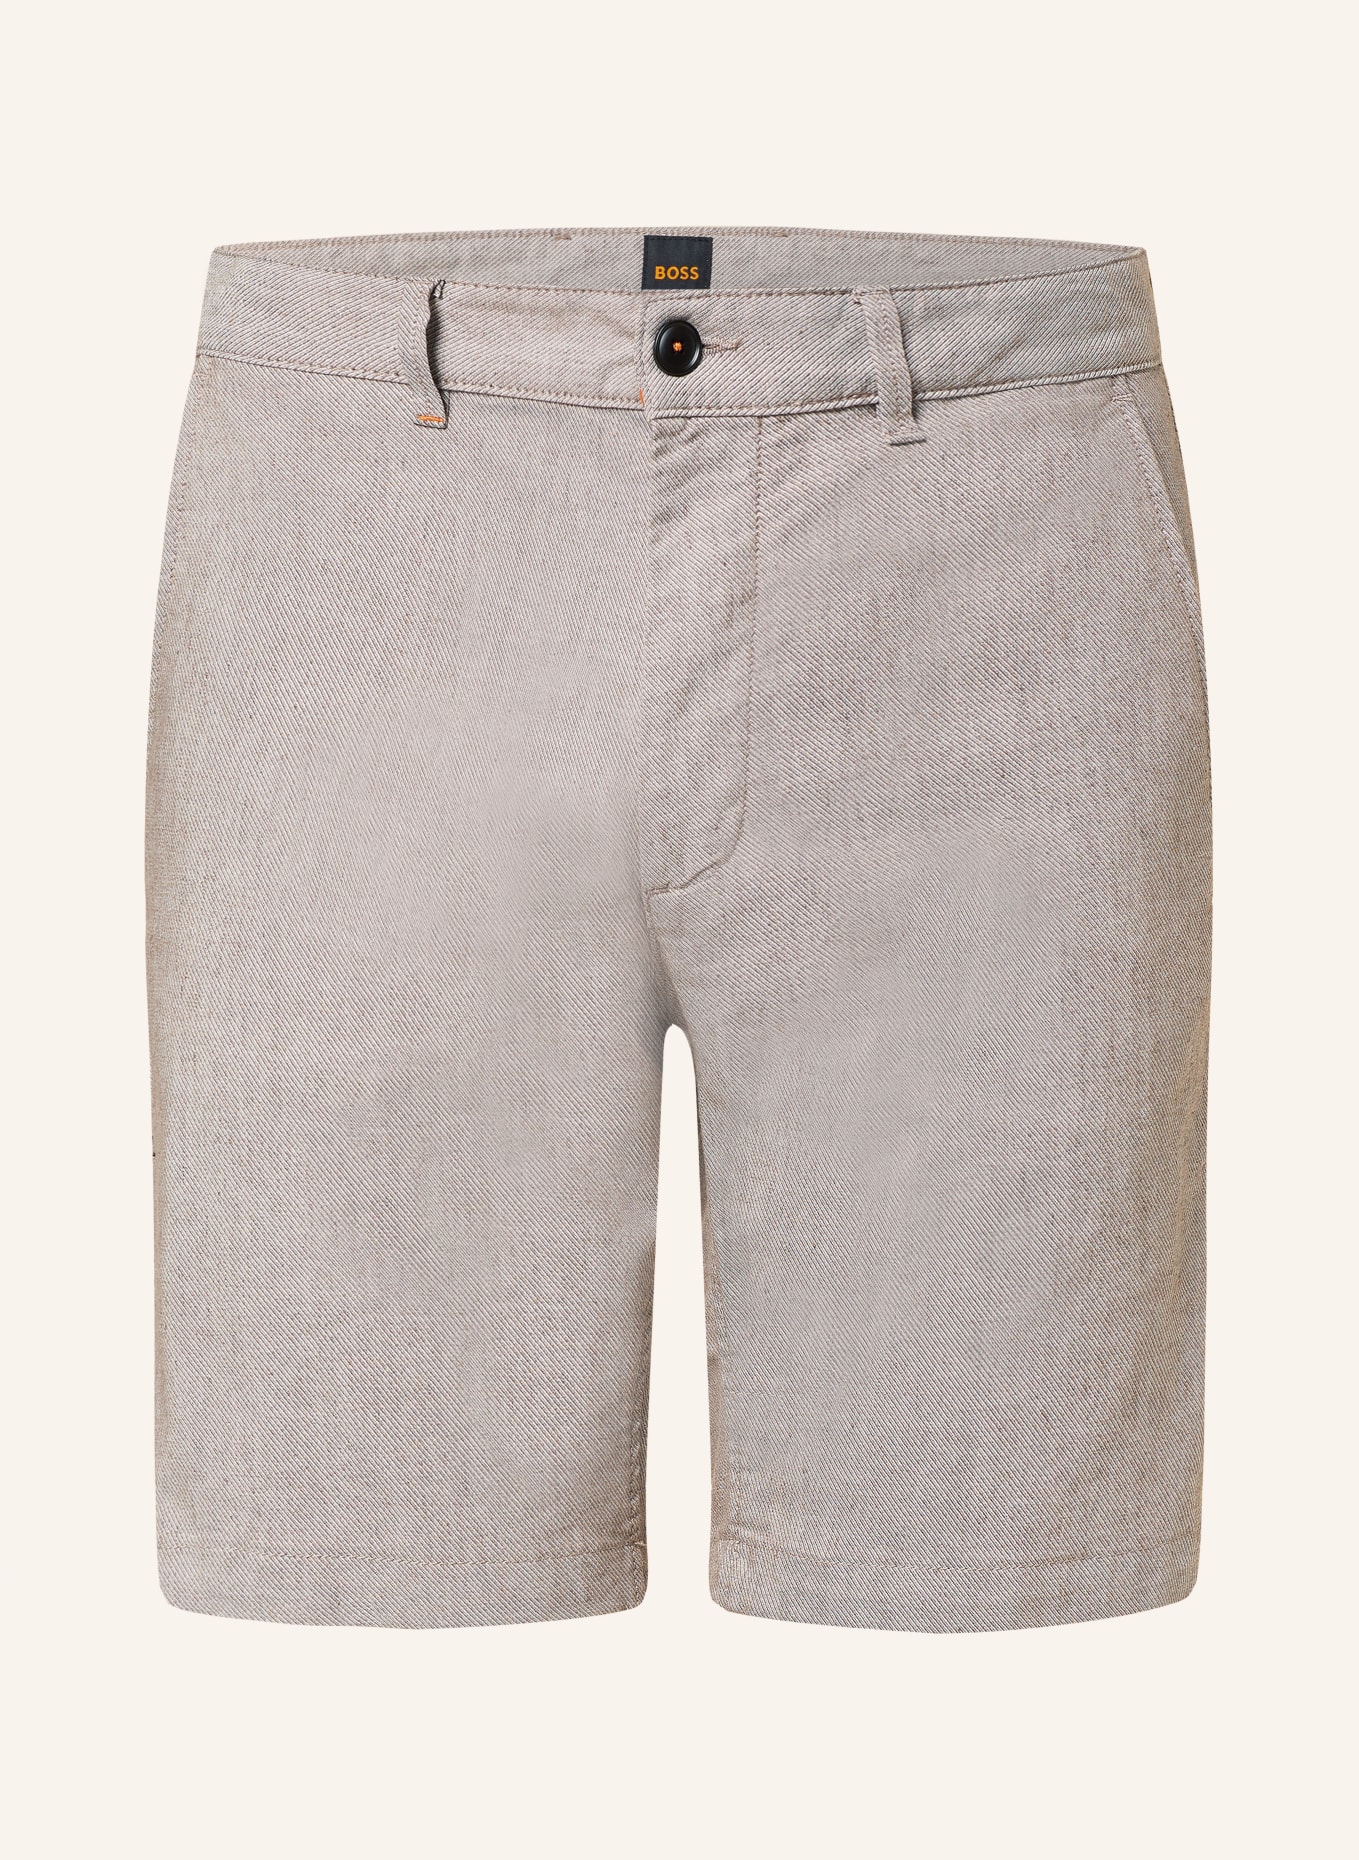 BOSS Shorts CHINO Slim Fit, Farbe: HELLBRAUN (Bild 1)